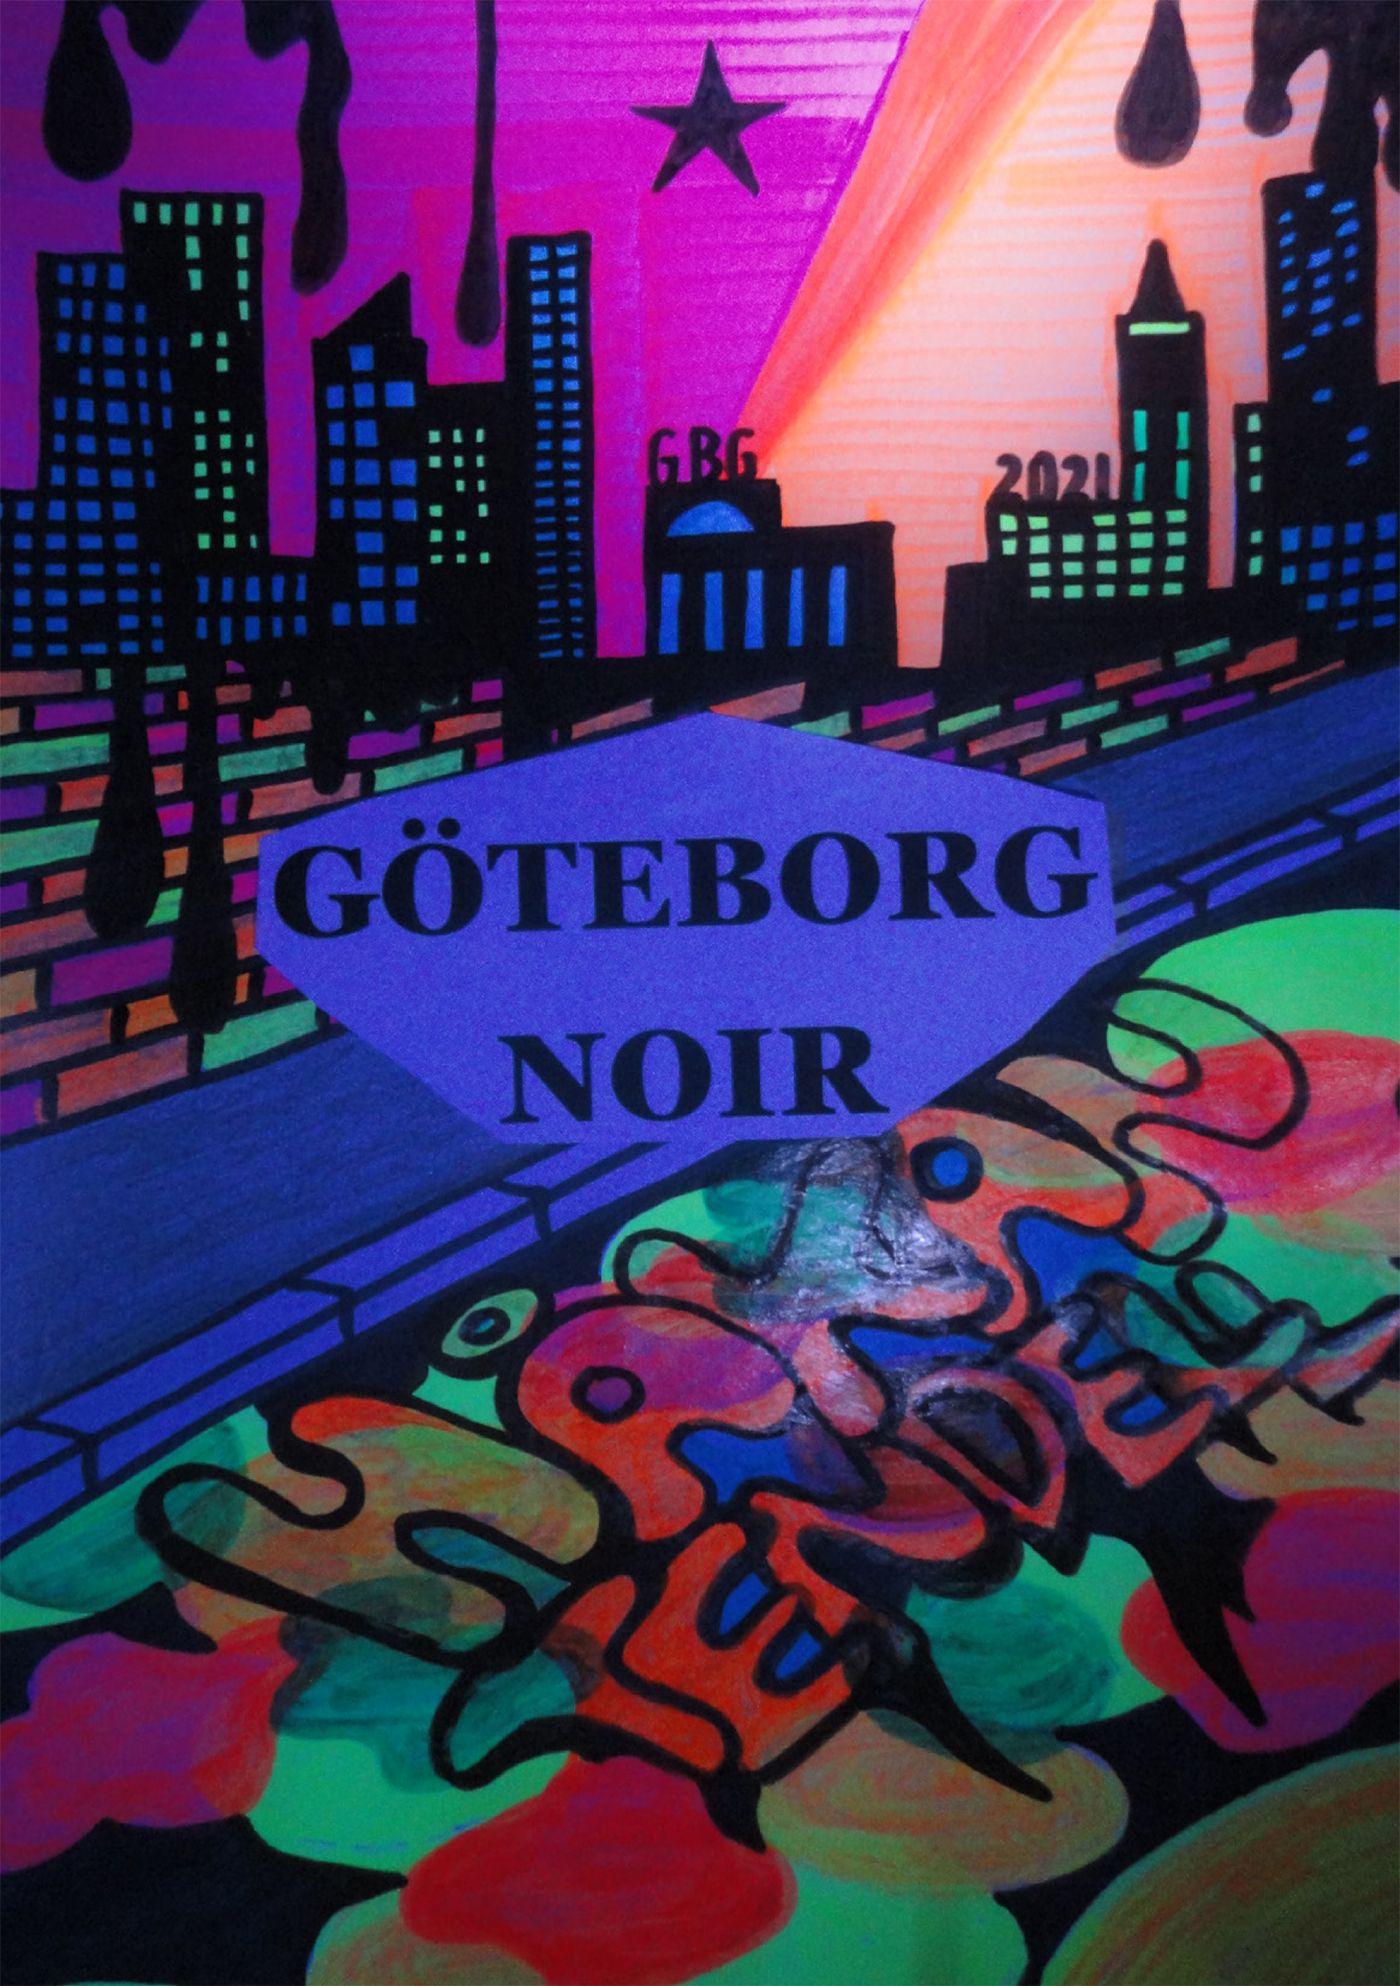 Göteborg Noir, e-bog af Håkan Tendell